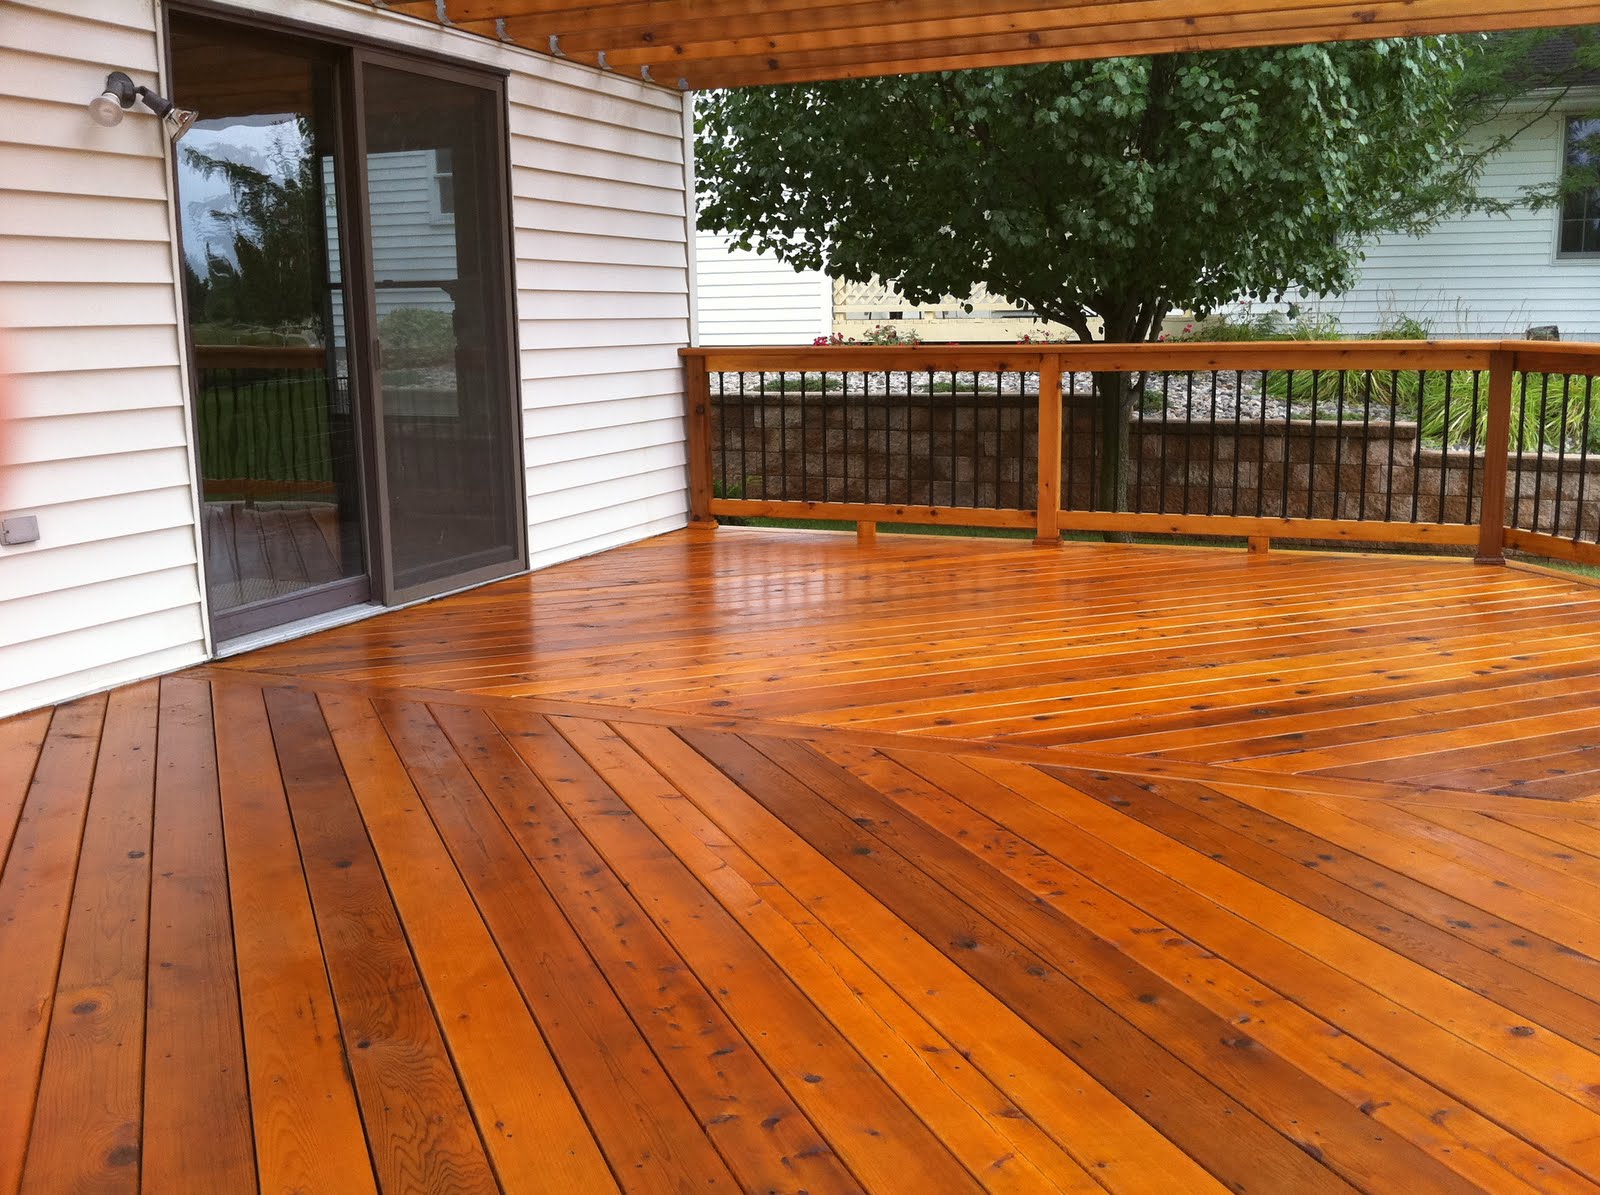 cedar wood decks in michigan | Autumnwoodconstruction's Blog